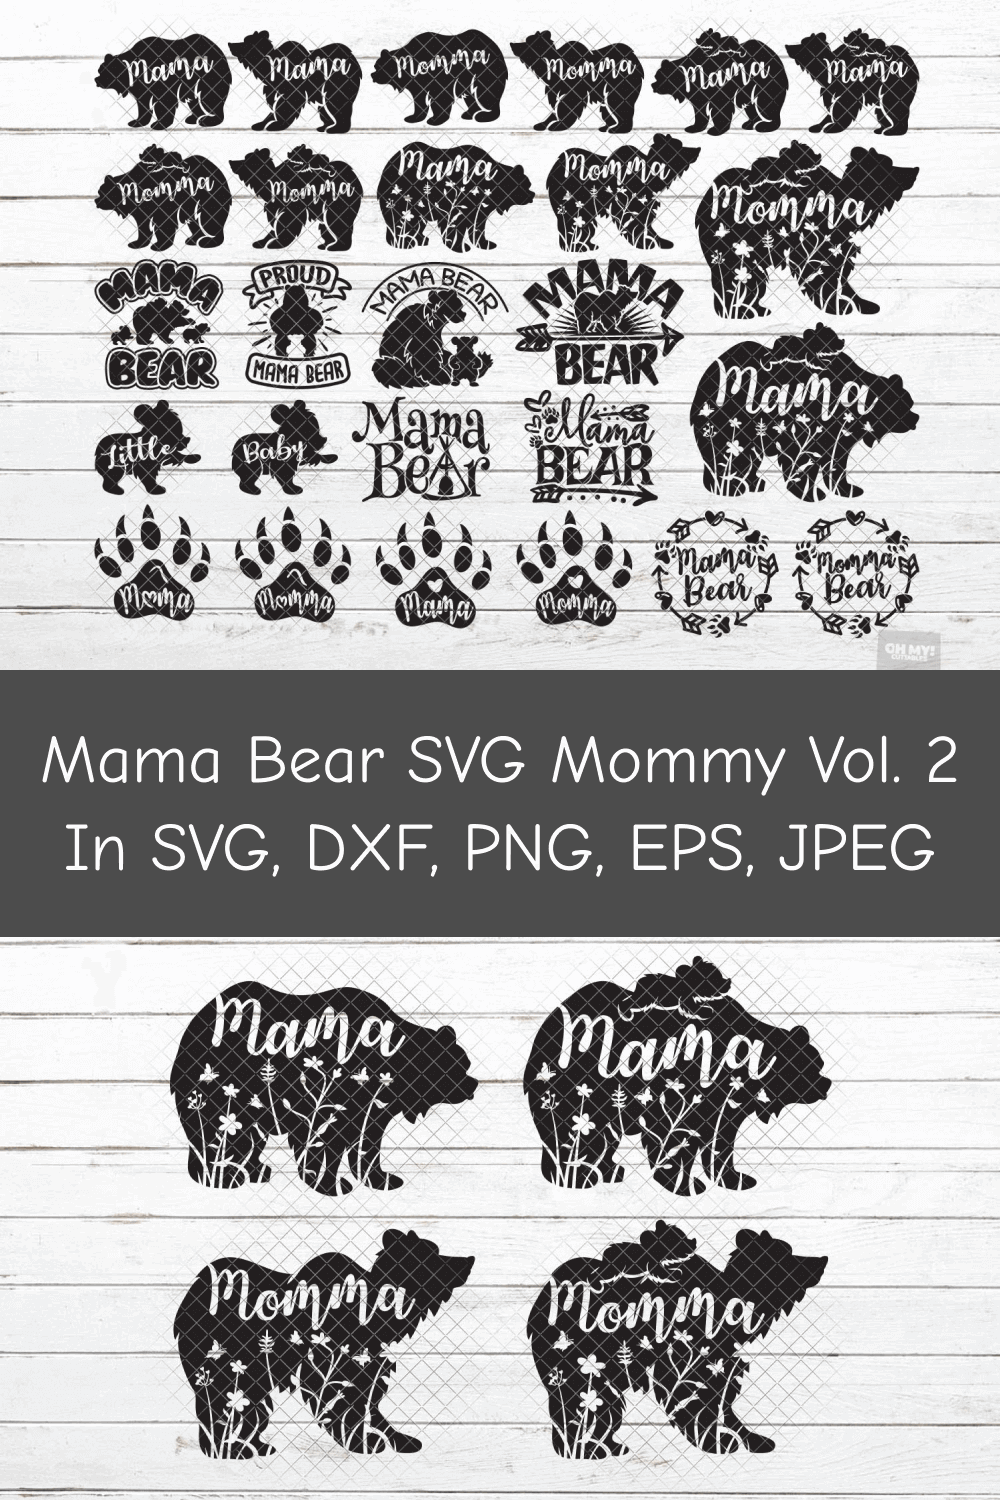 The Bear's Print and the Mama Bear.